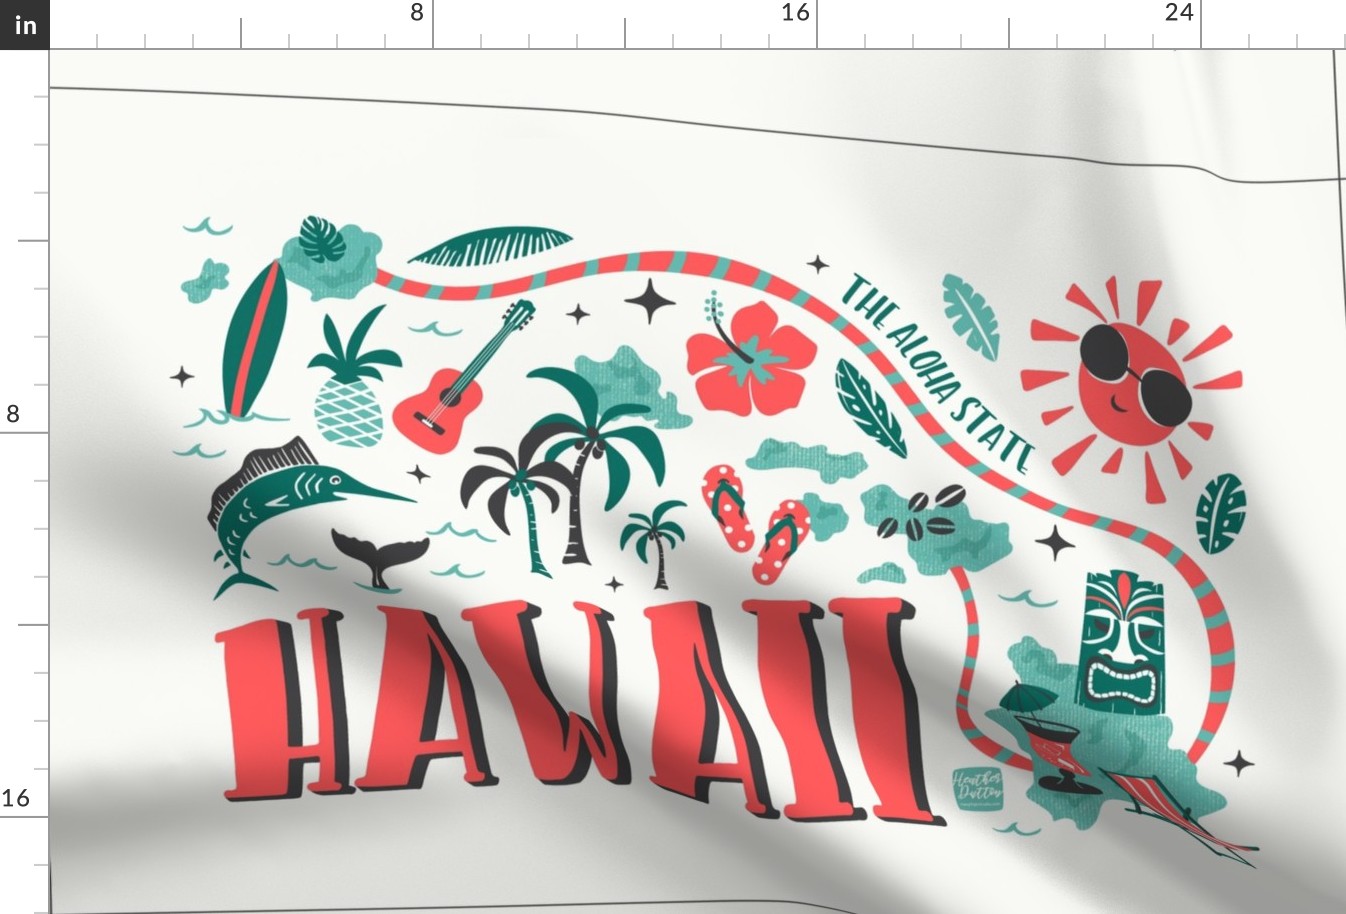 Hawaii Map Tea Towel - Retro Illustrated Travel Map